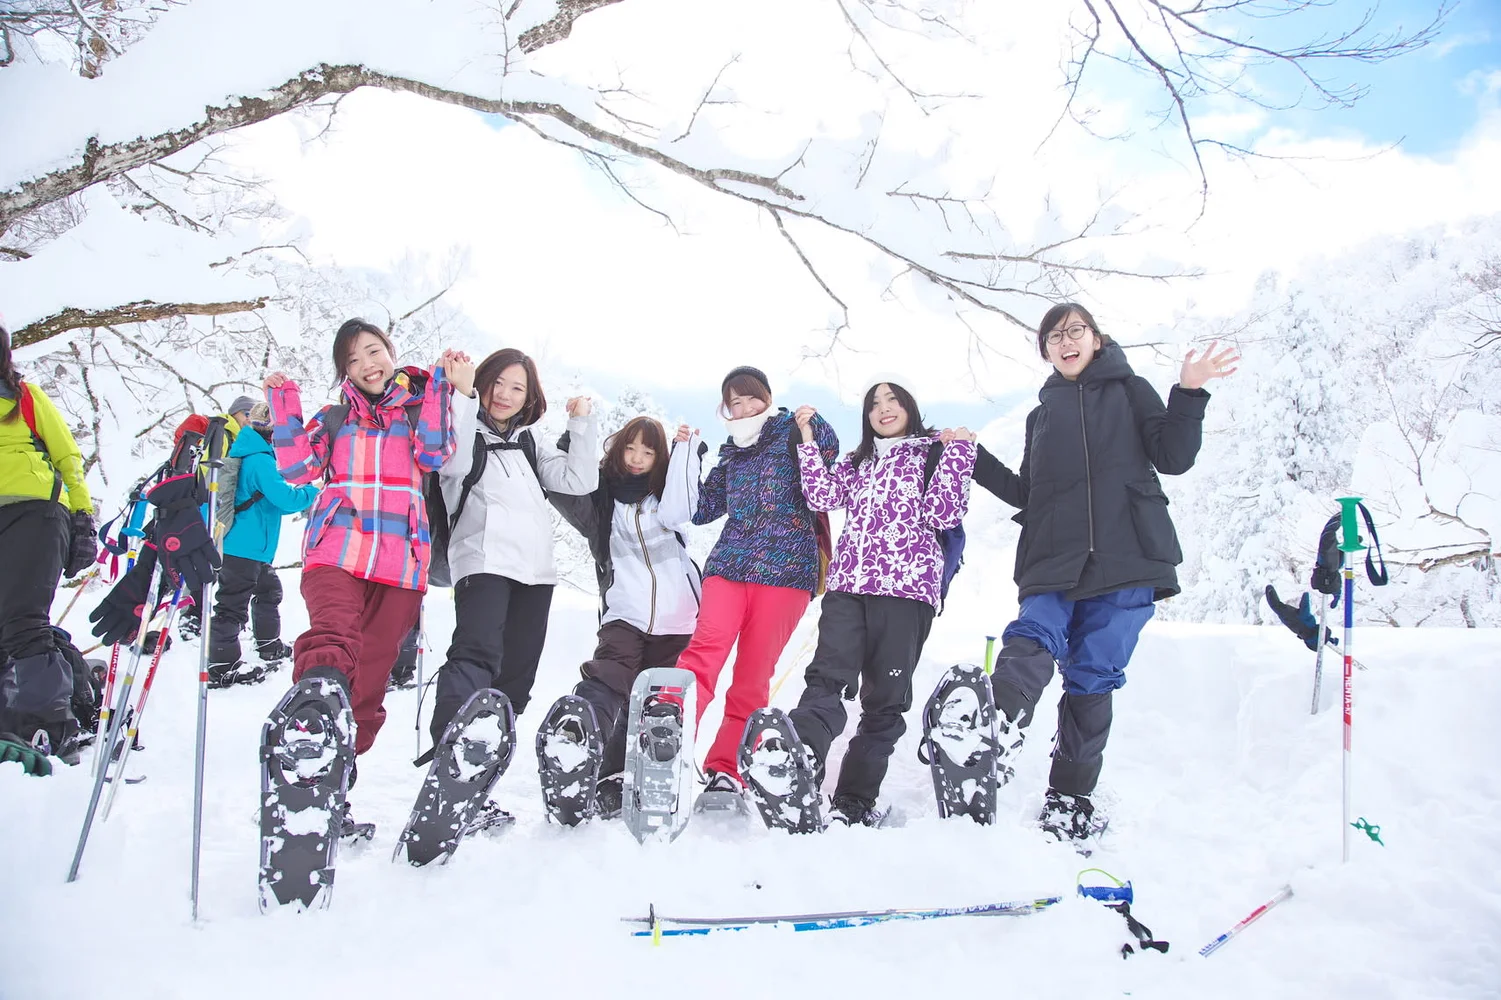 Snowshoe Trekking Tour on Mt. Daisen in Tottori Japan